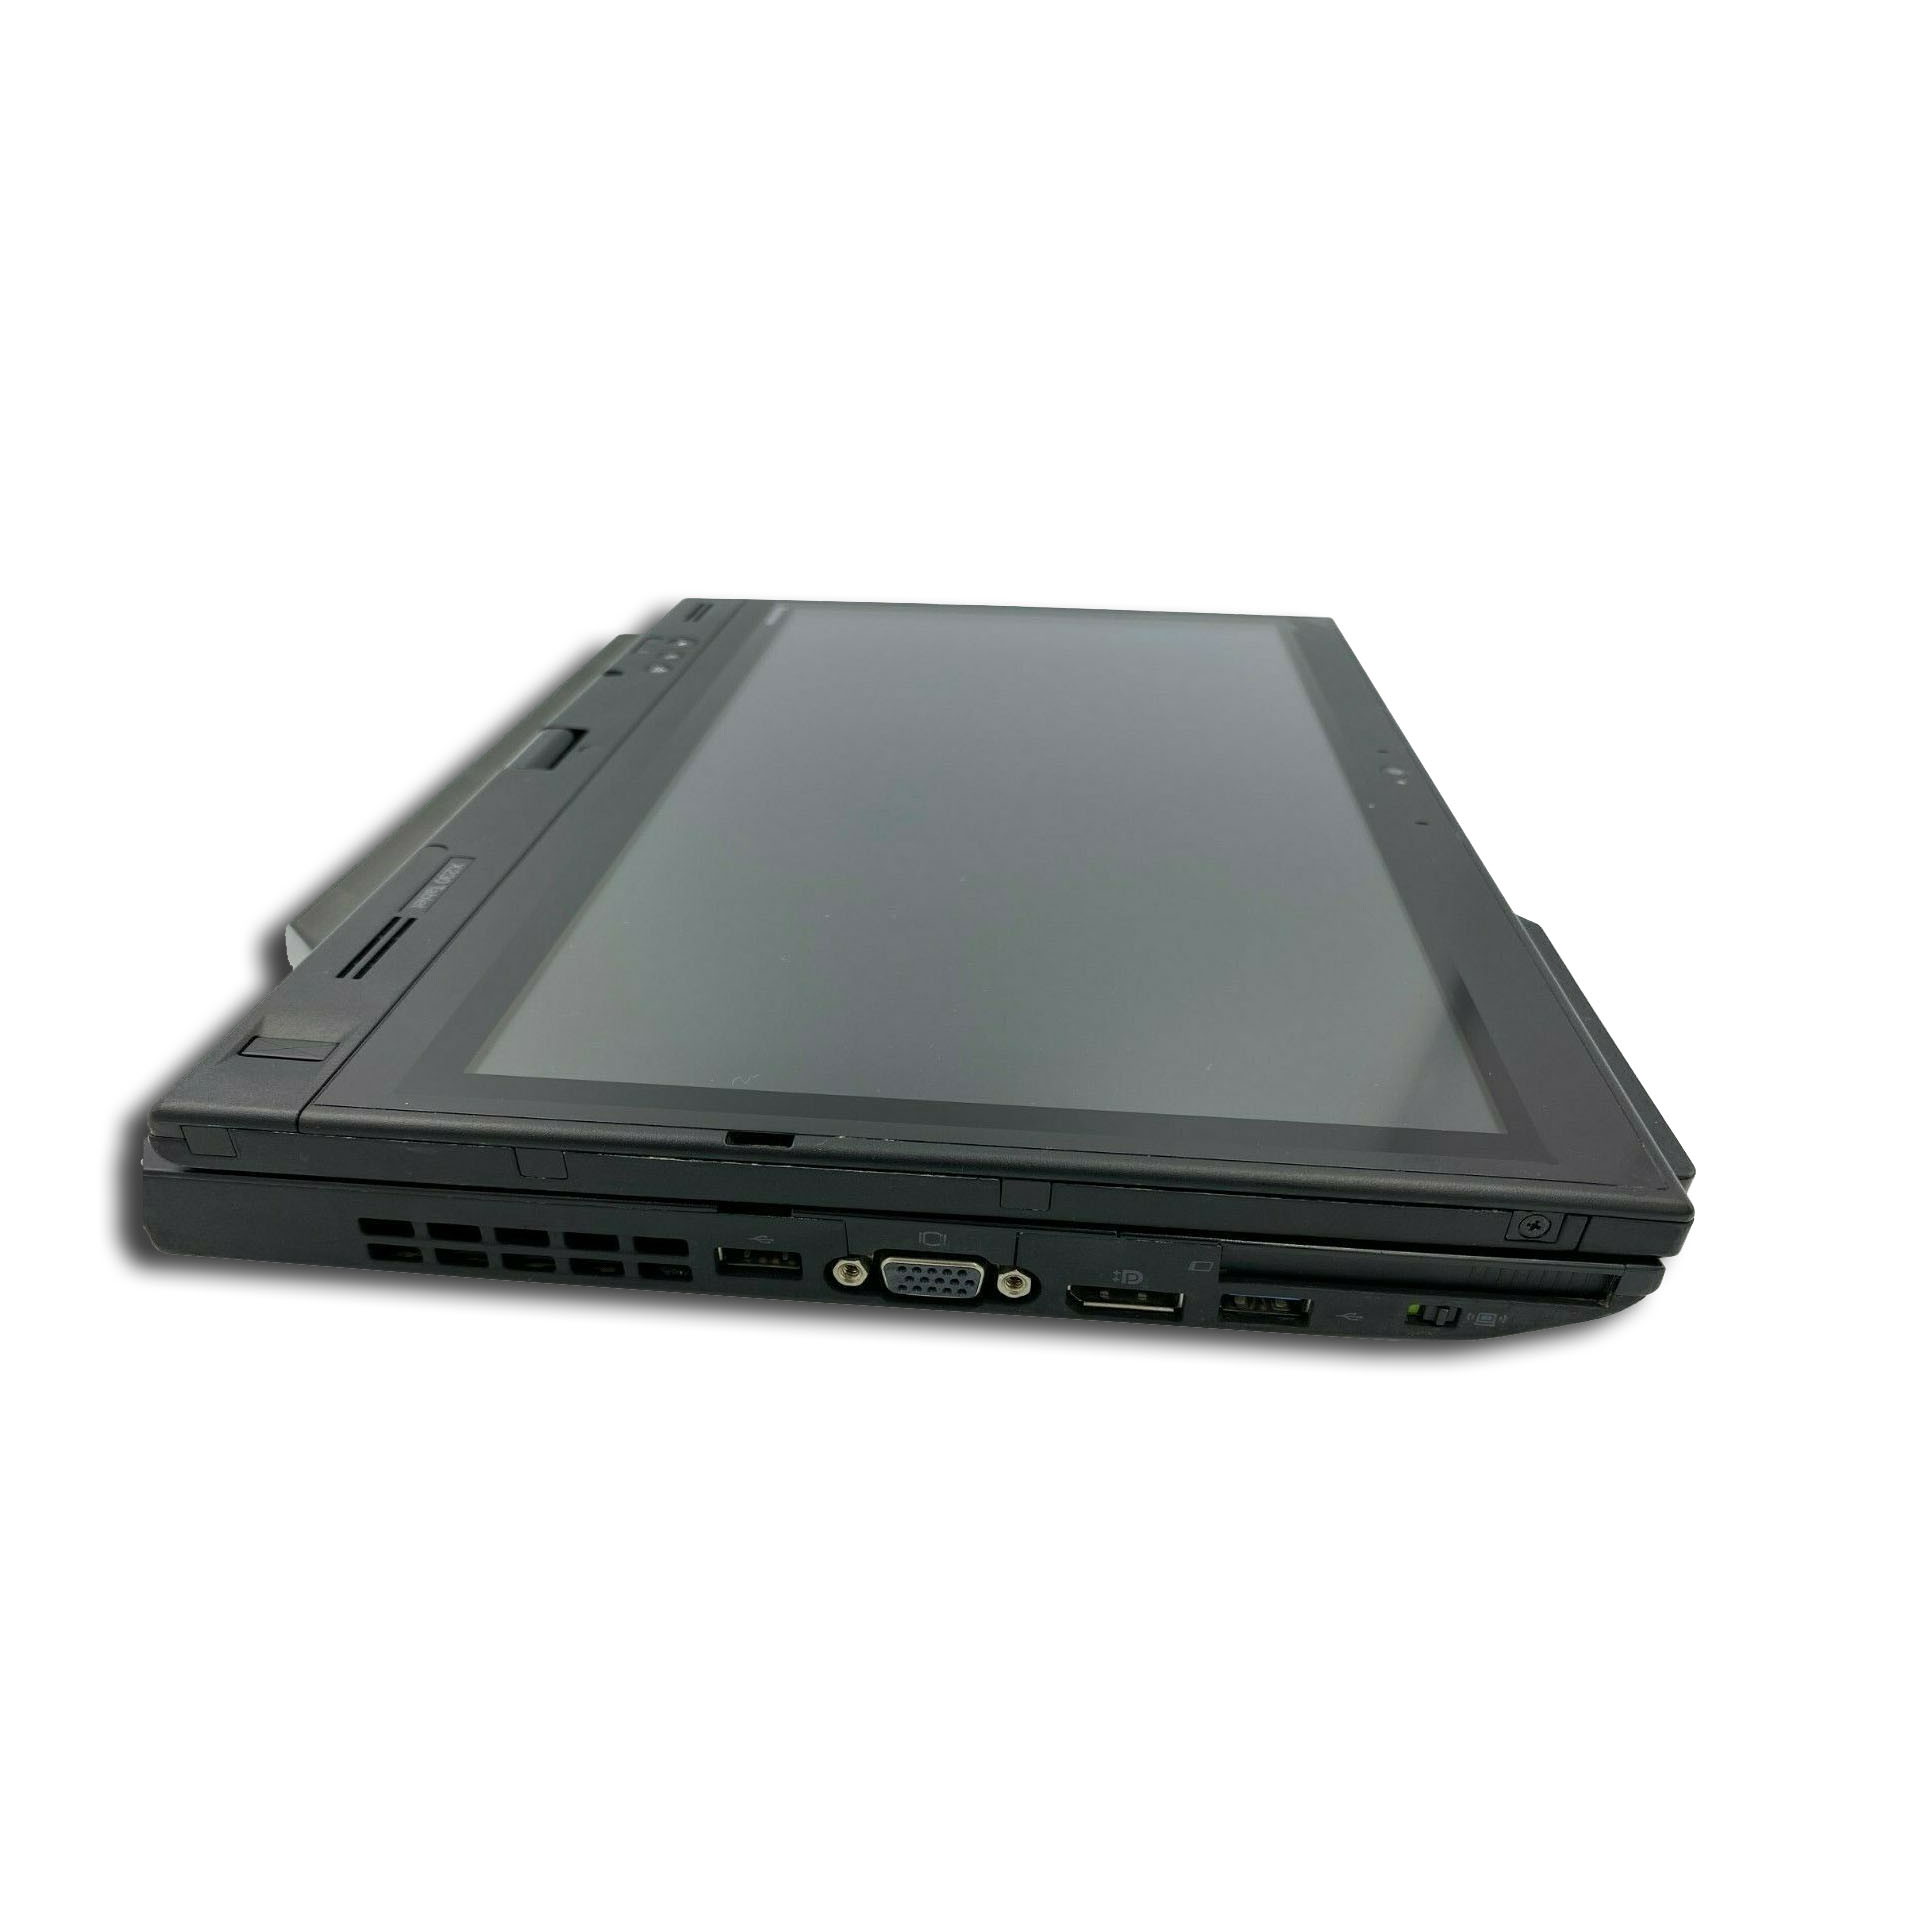 Laptop Lenovo X230 Tablet, Core i7-3520m 2.90GHz, Ram 4GB, HDD 250GB